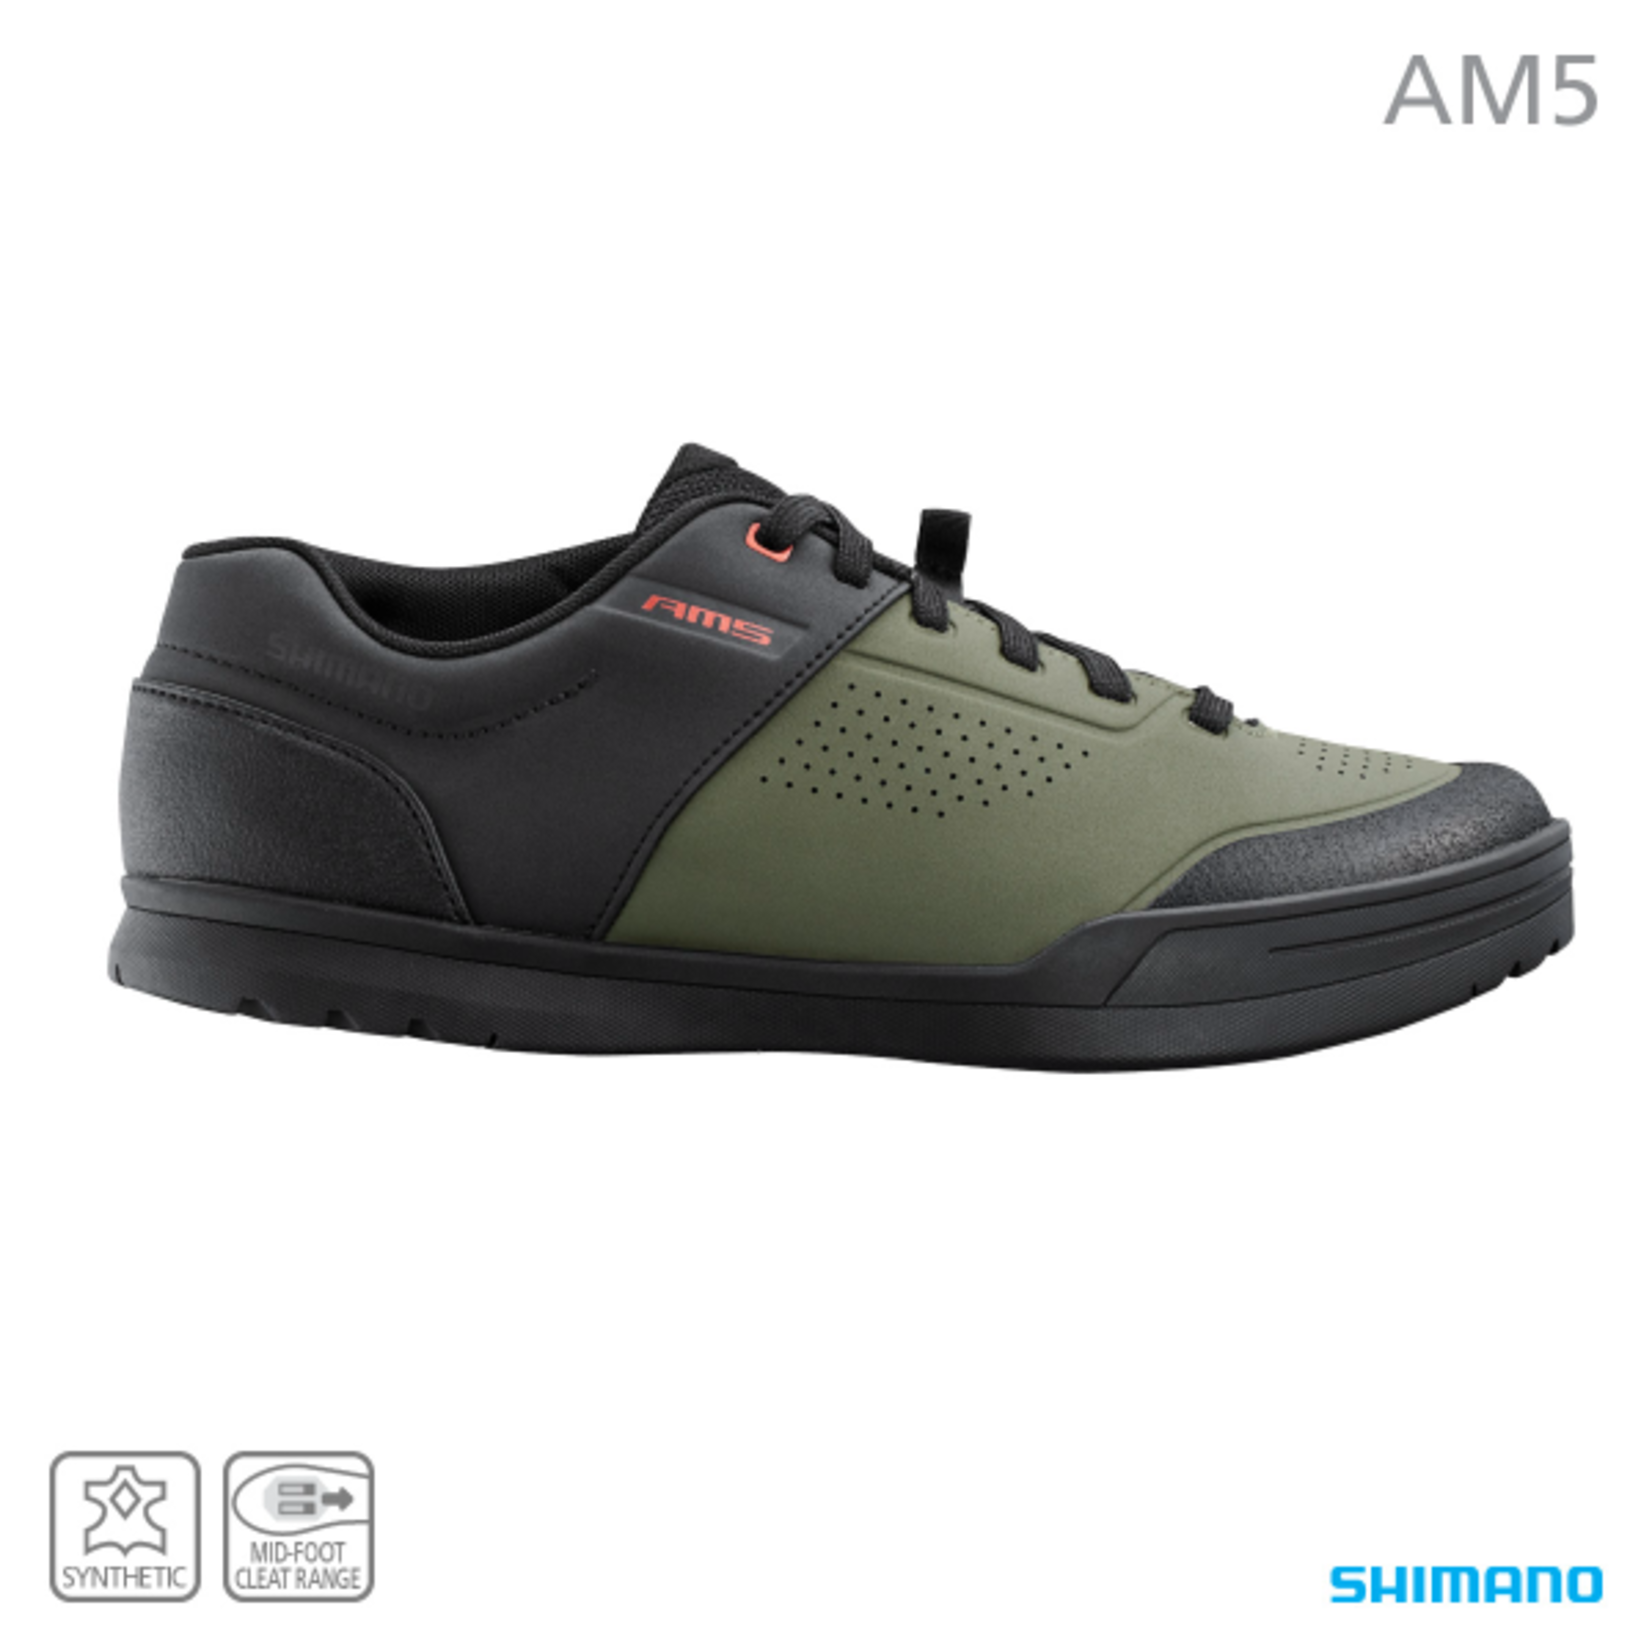 Shimano Shimano SH-AM503 Freeride Shoes - Olive - Size 45